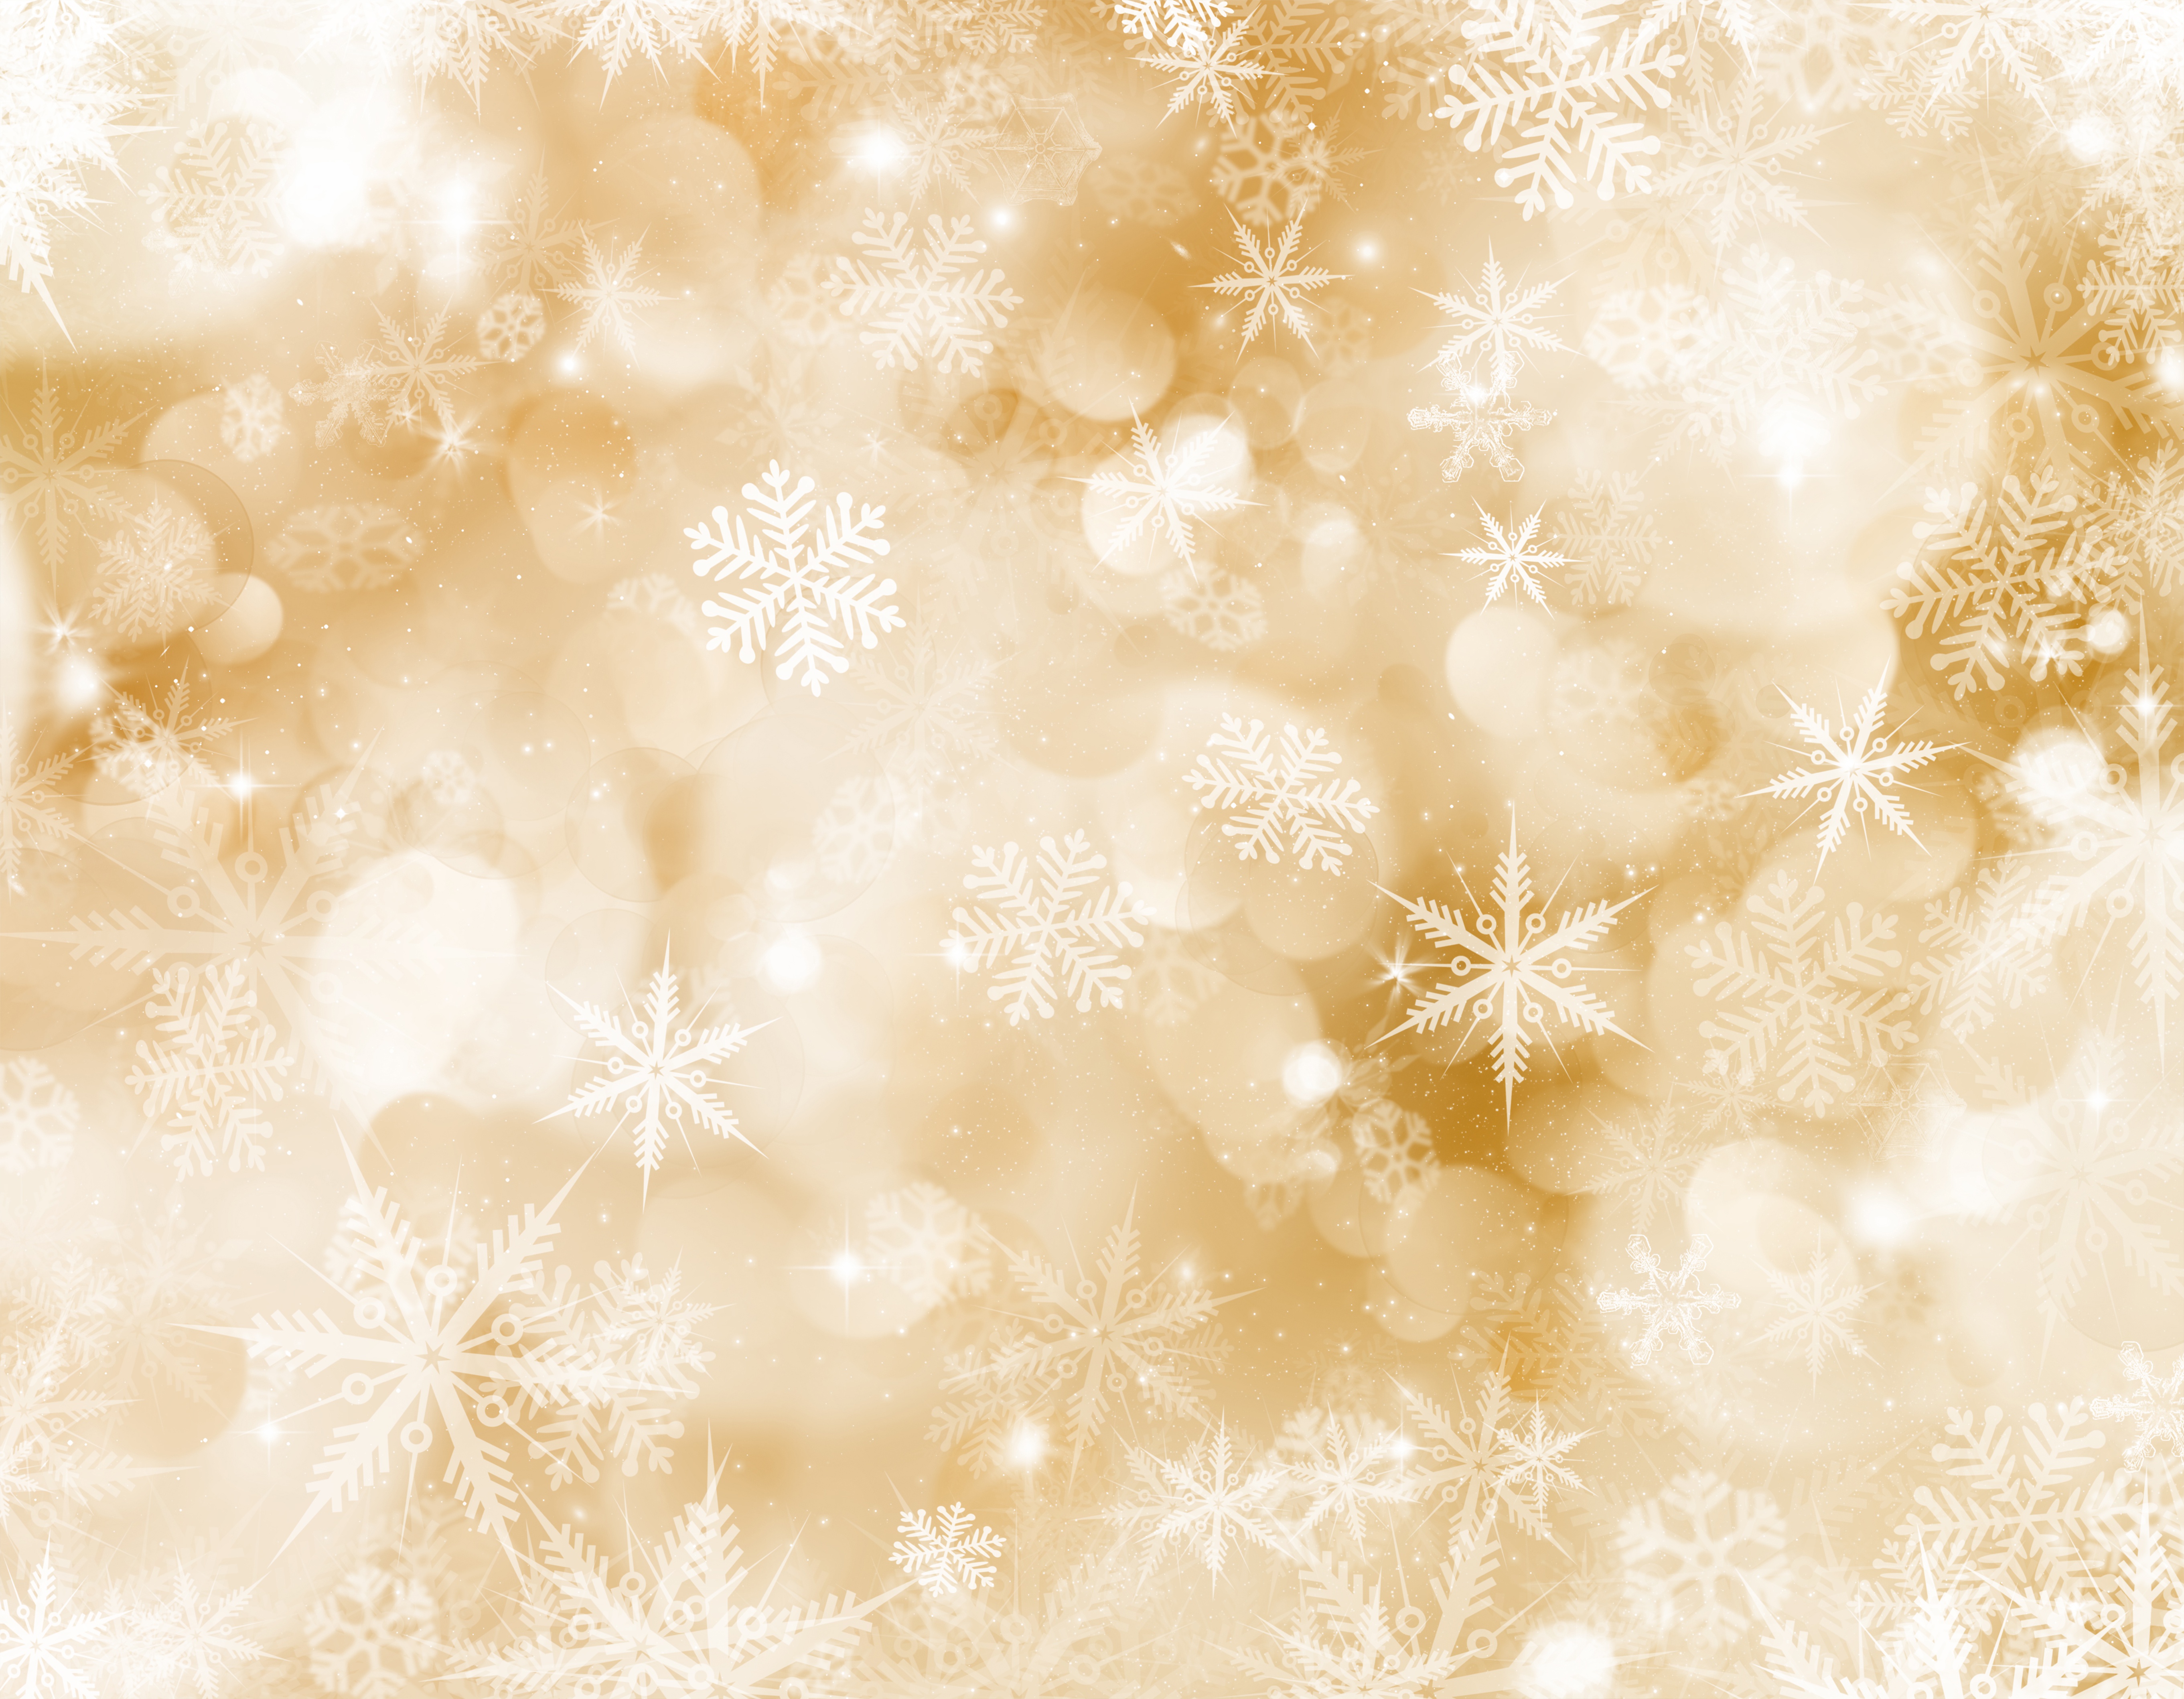 Snowflake Winter 5445x4235